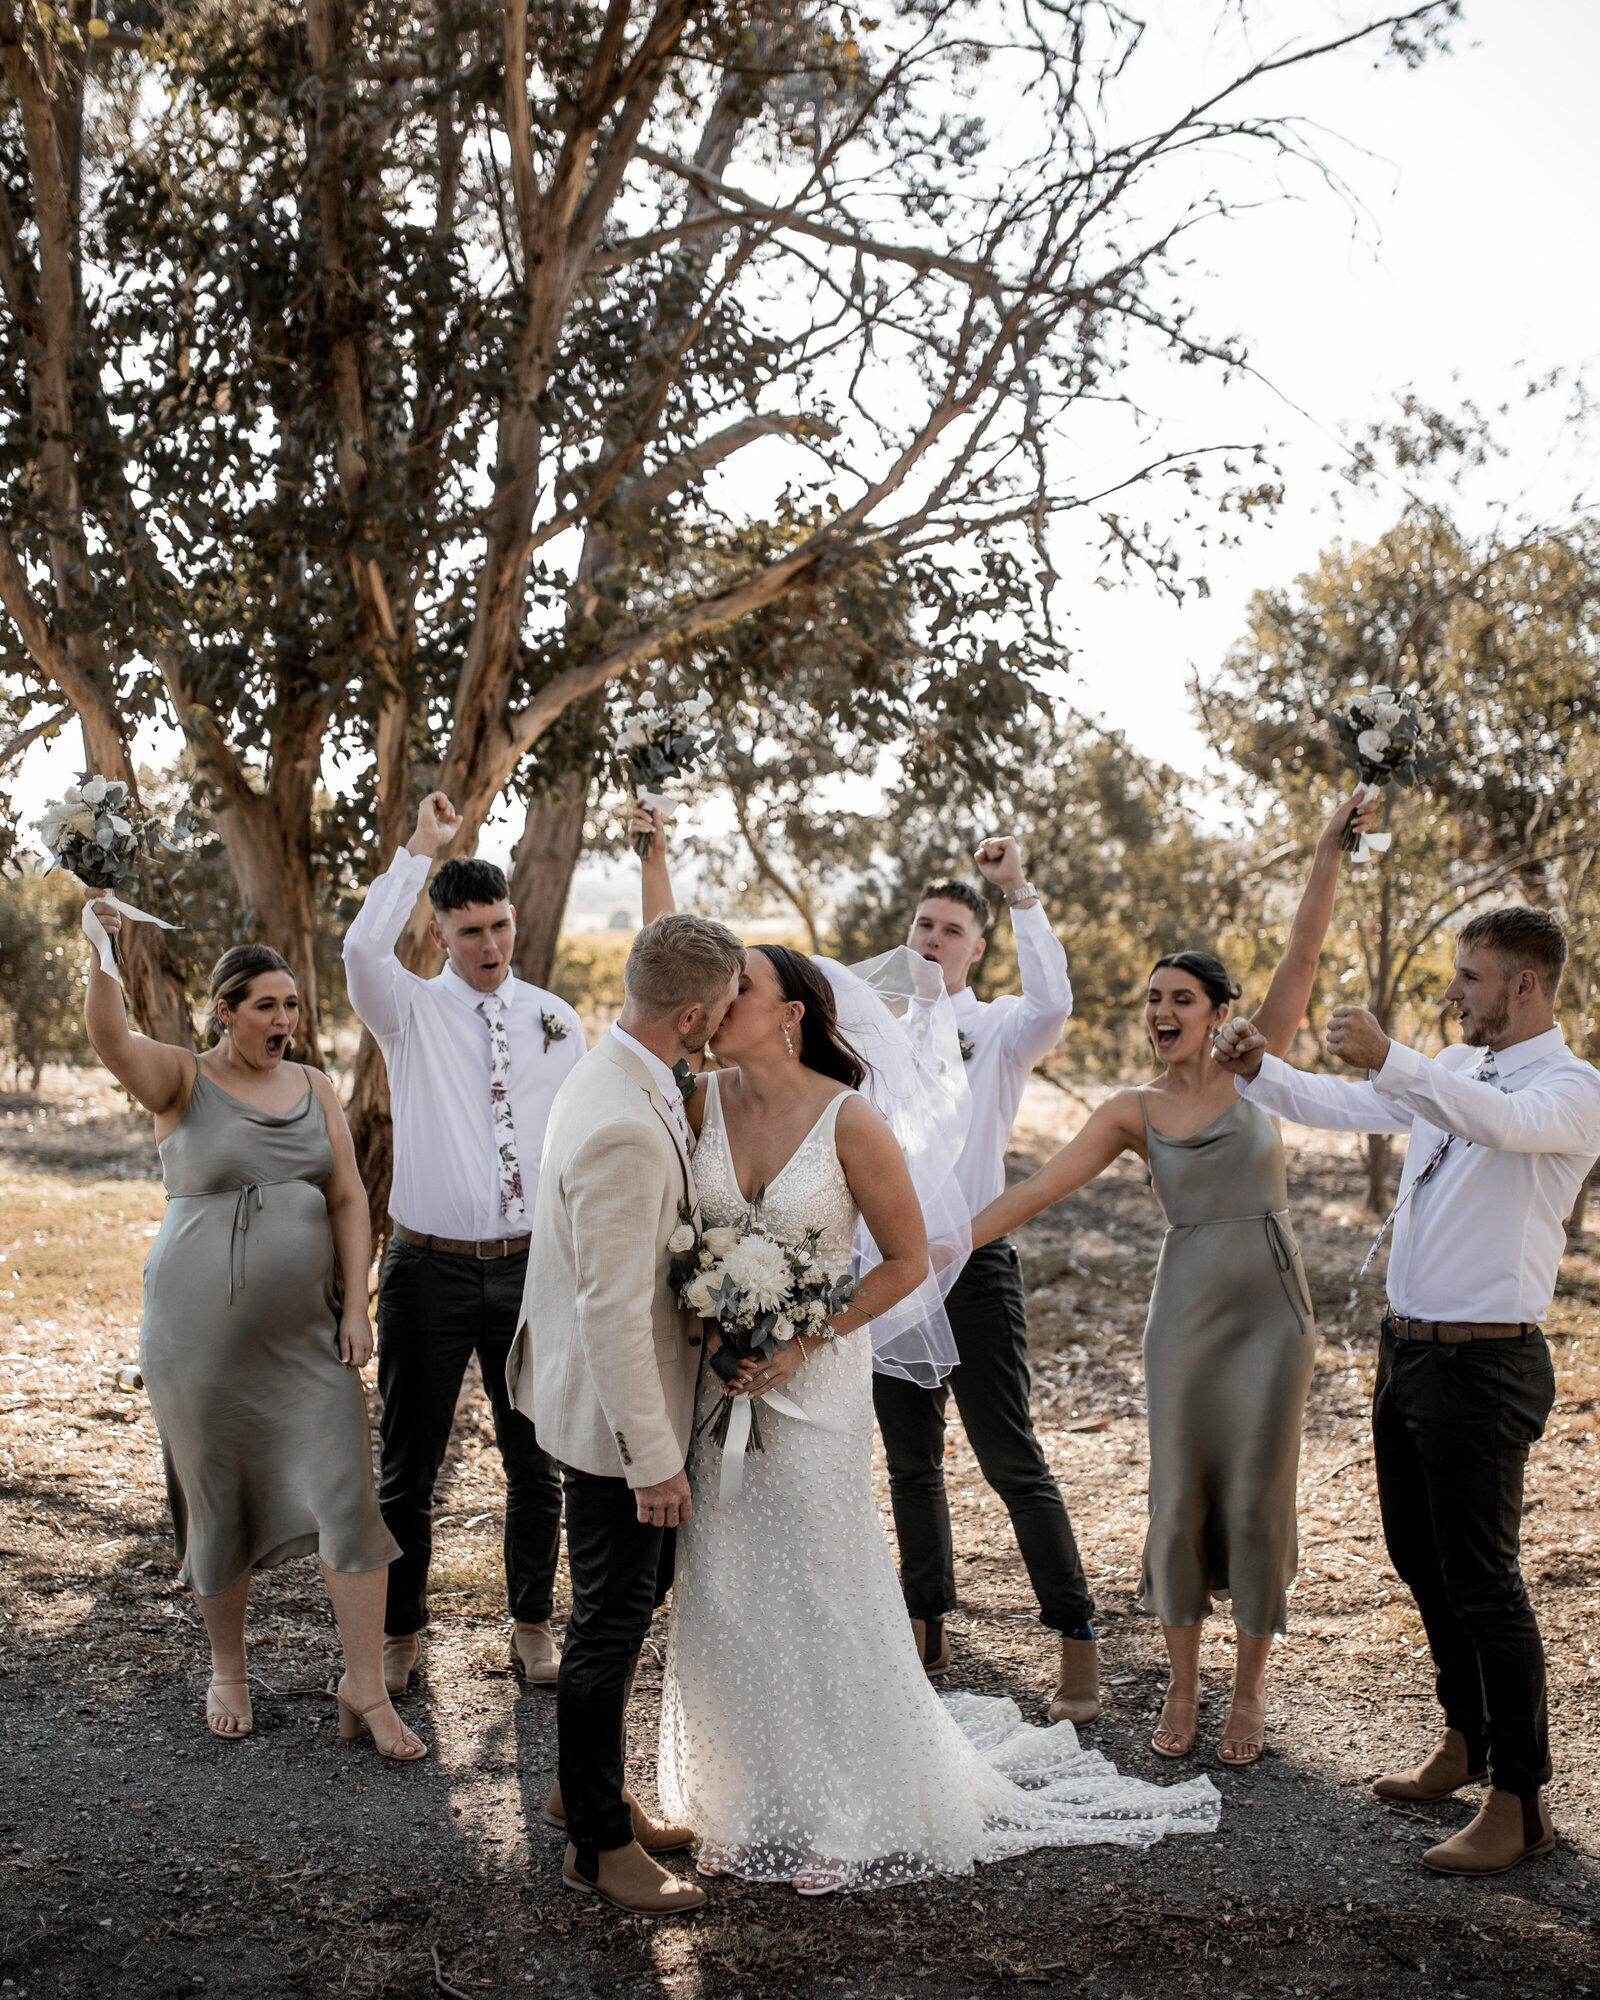 Caitlin-Reece-Rexvil-Photography-Adelaide-Wedding-Photographer-429